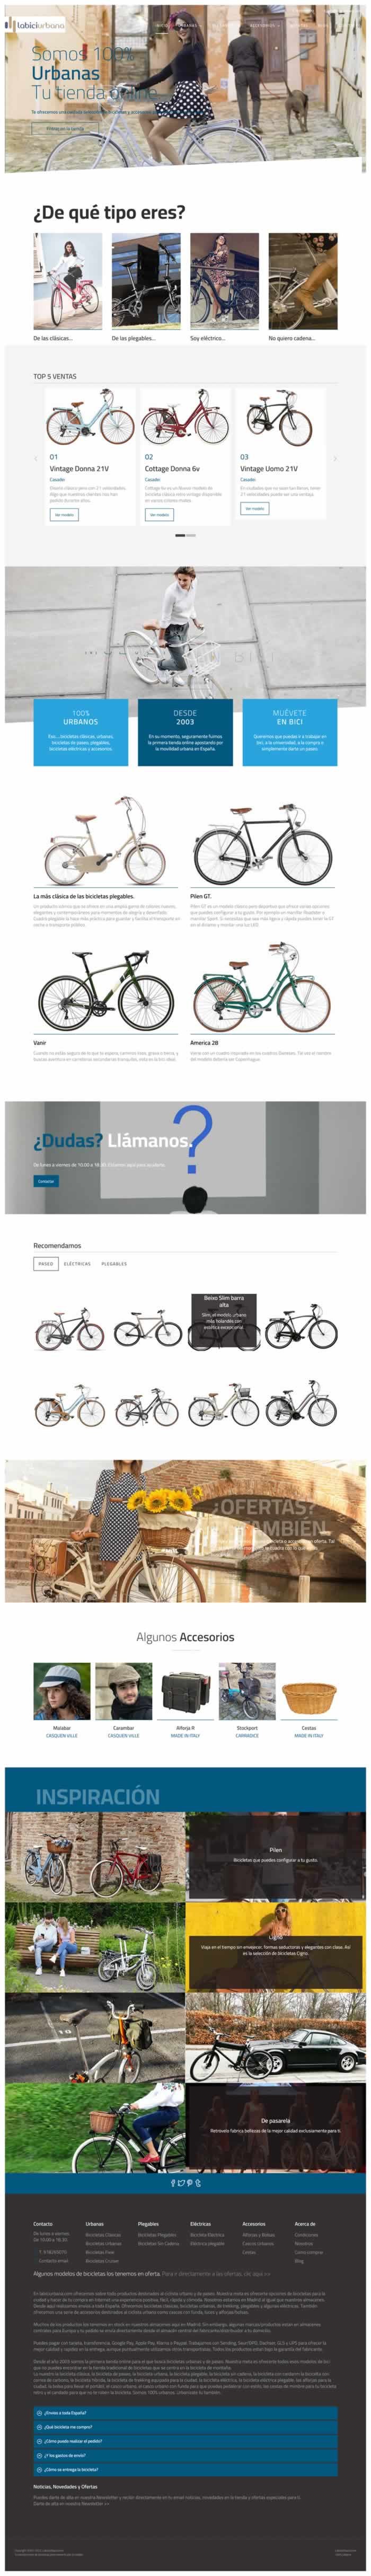 Nuevo Diseño tienda online labiciurbana.com